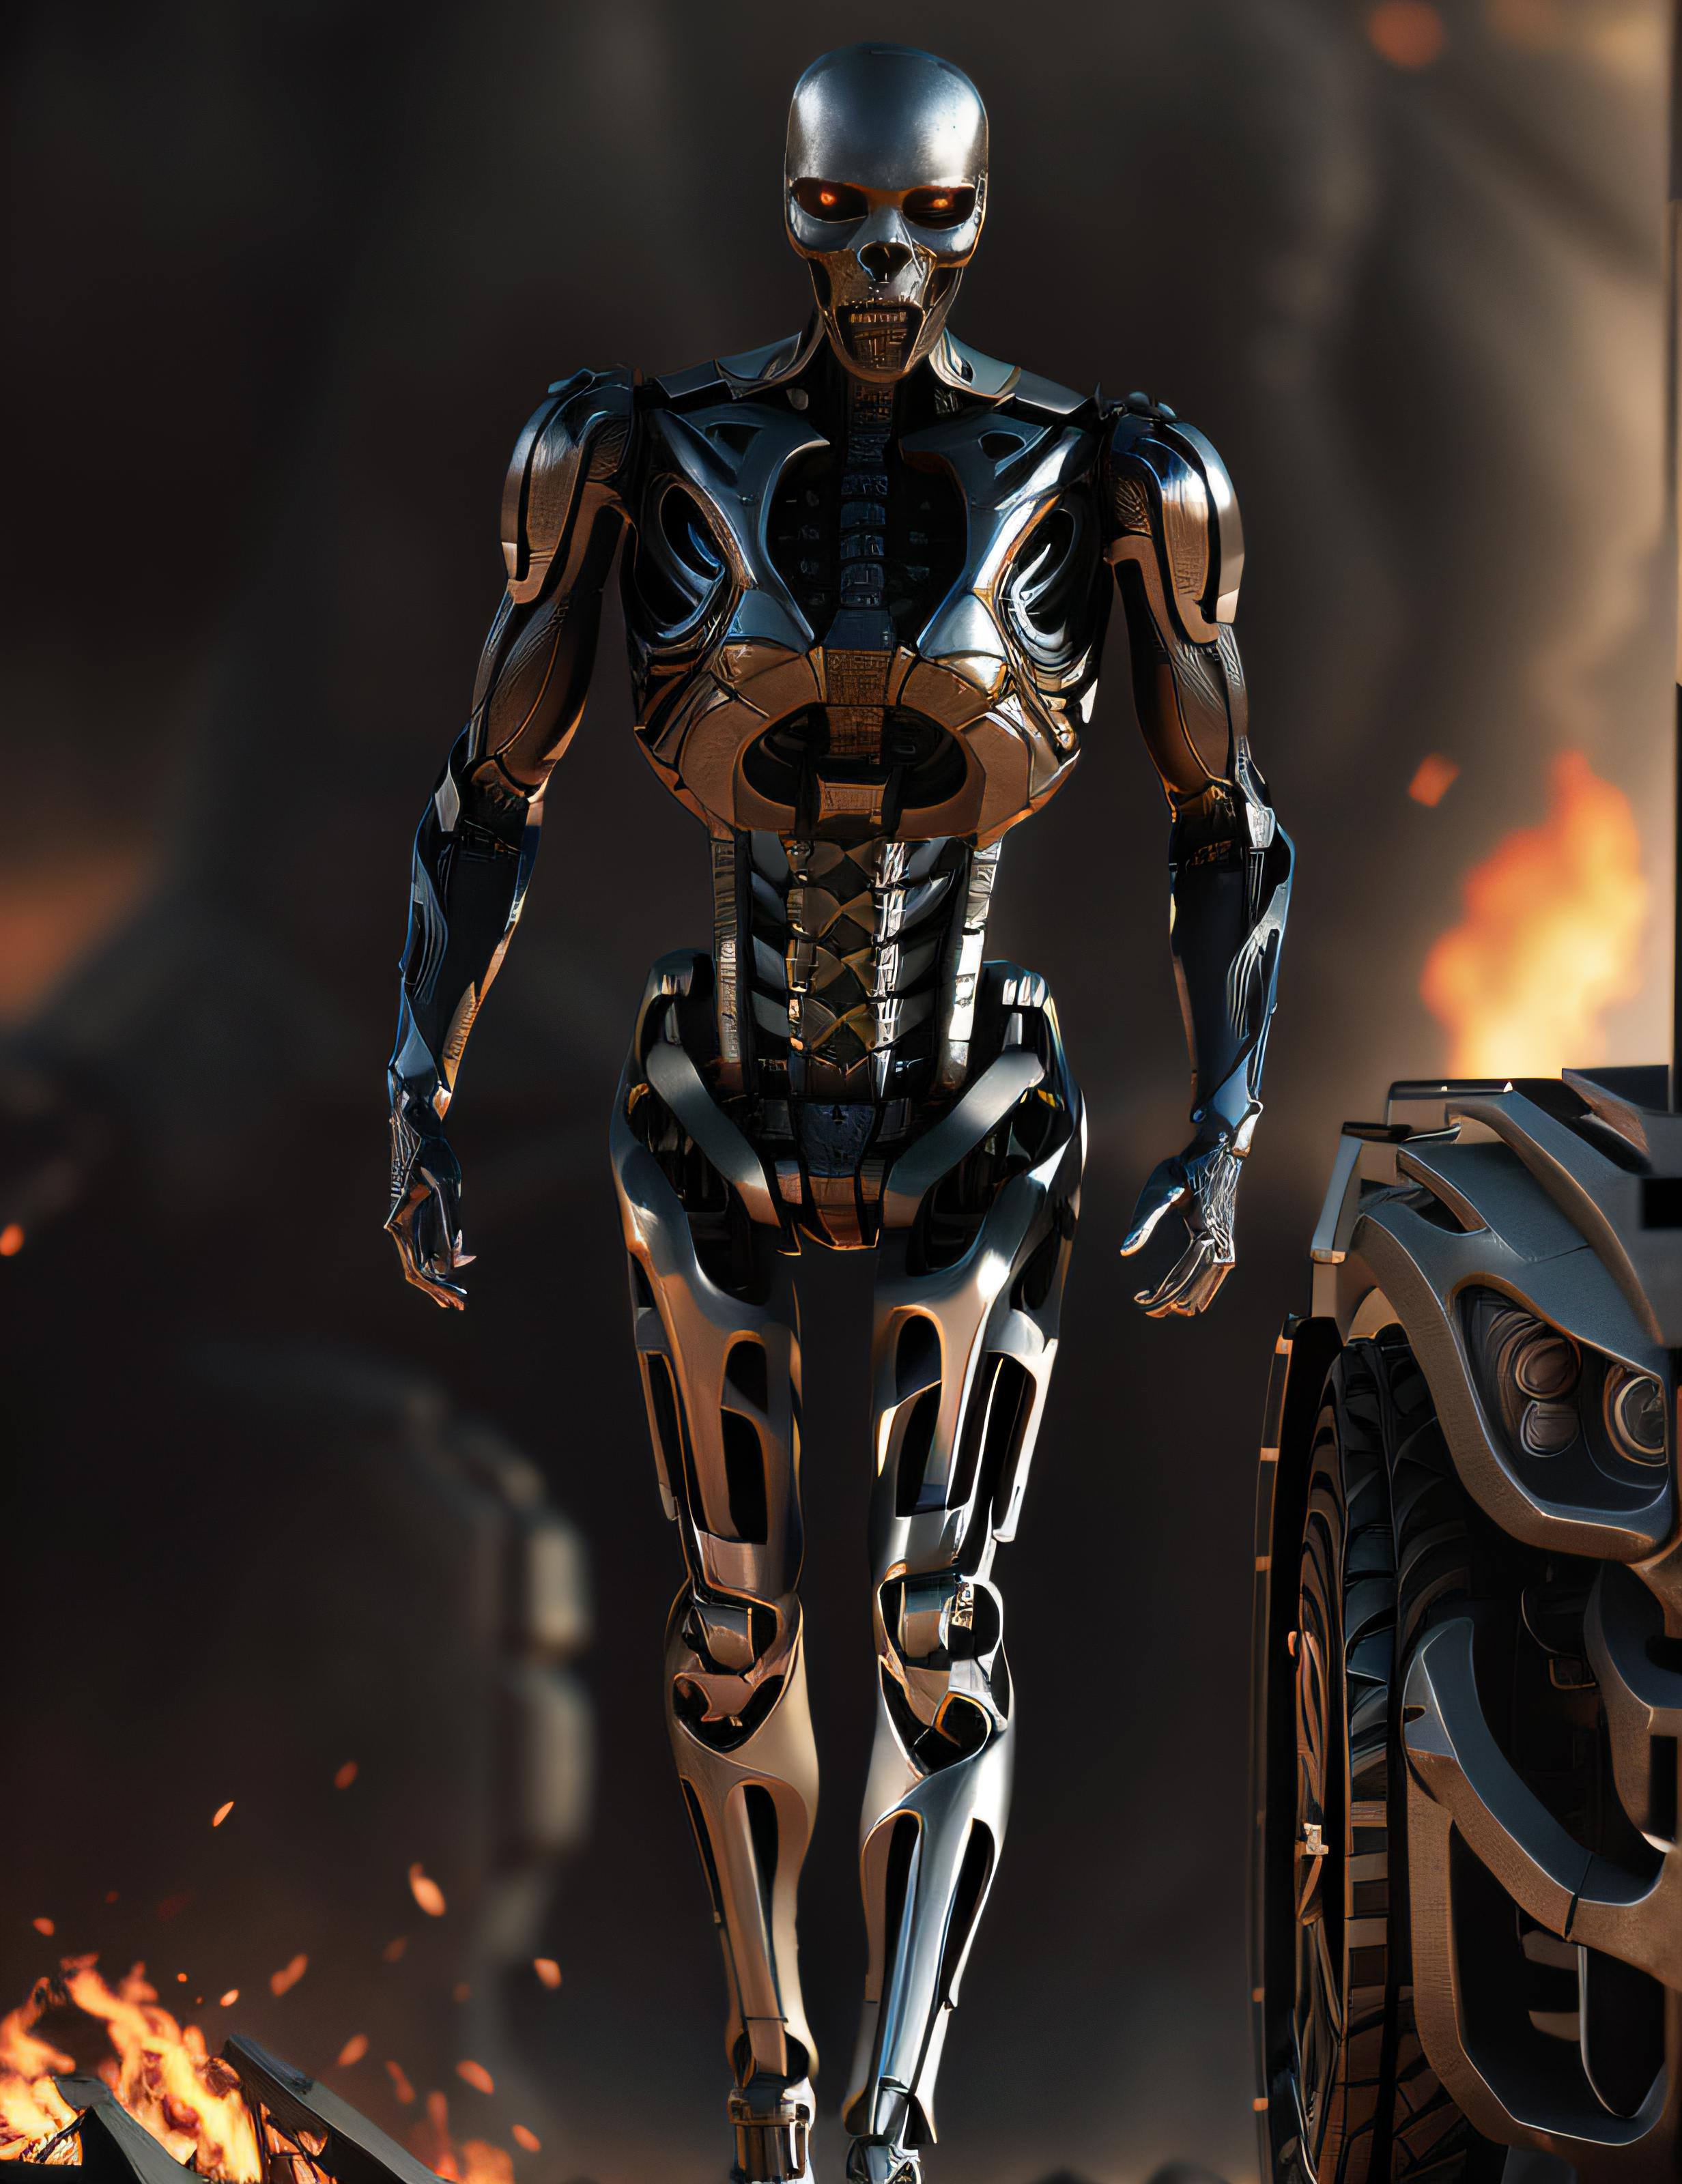 Cyborg 1.0 image by mdsavio